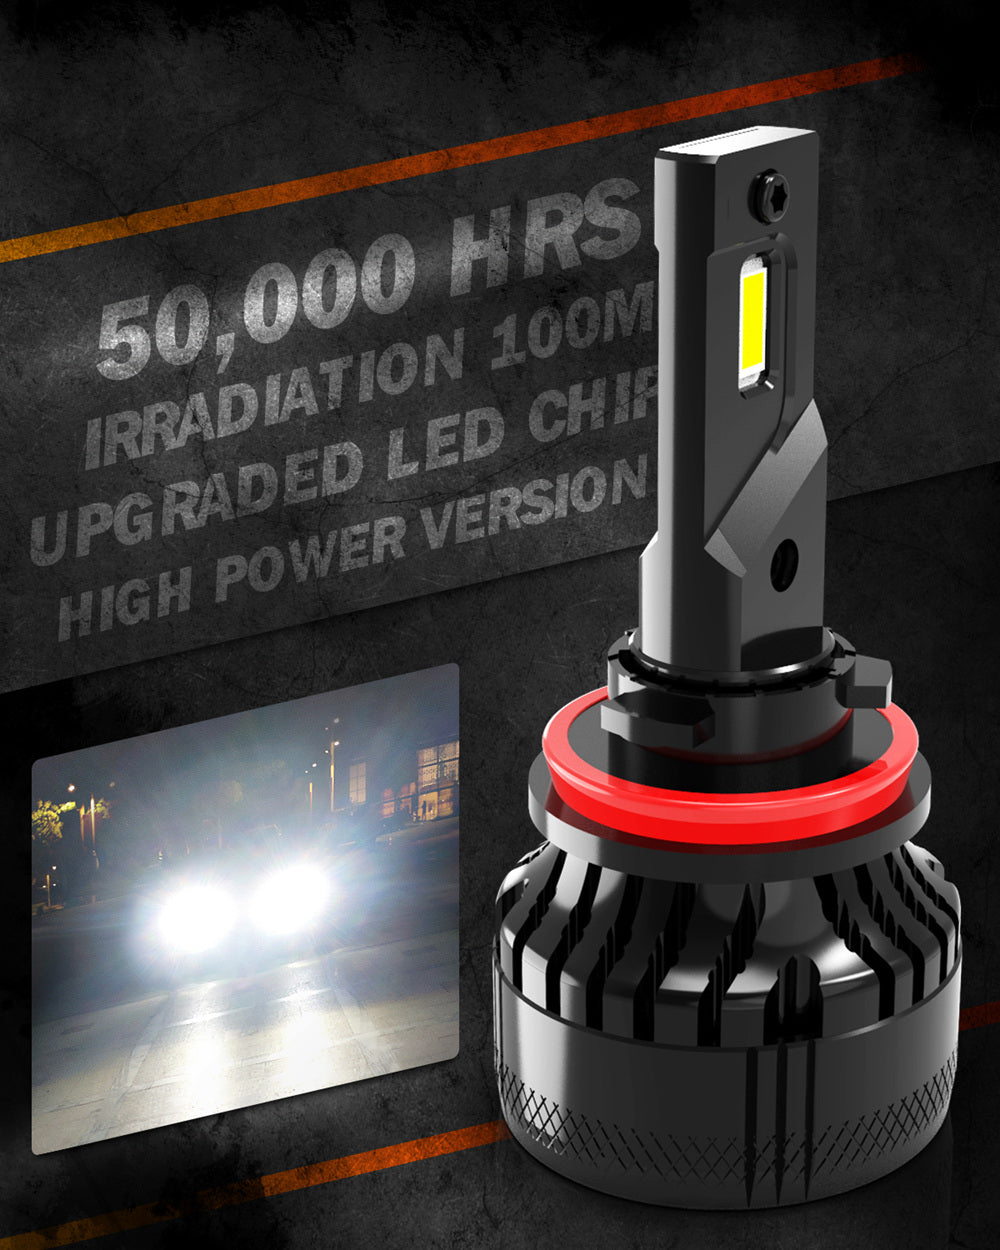 KaTur 20000Lm H4 H11 H7 H1 9012 9005 9006 HB3 Canbus LED Headlight Car Light Bulb fit For Volvo XC60 XC90 S60 V70 S80 S40 V40 V50 XC70